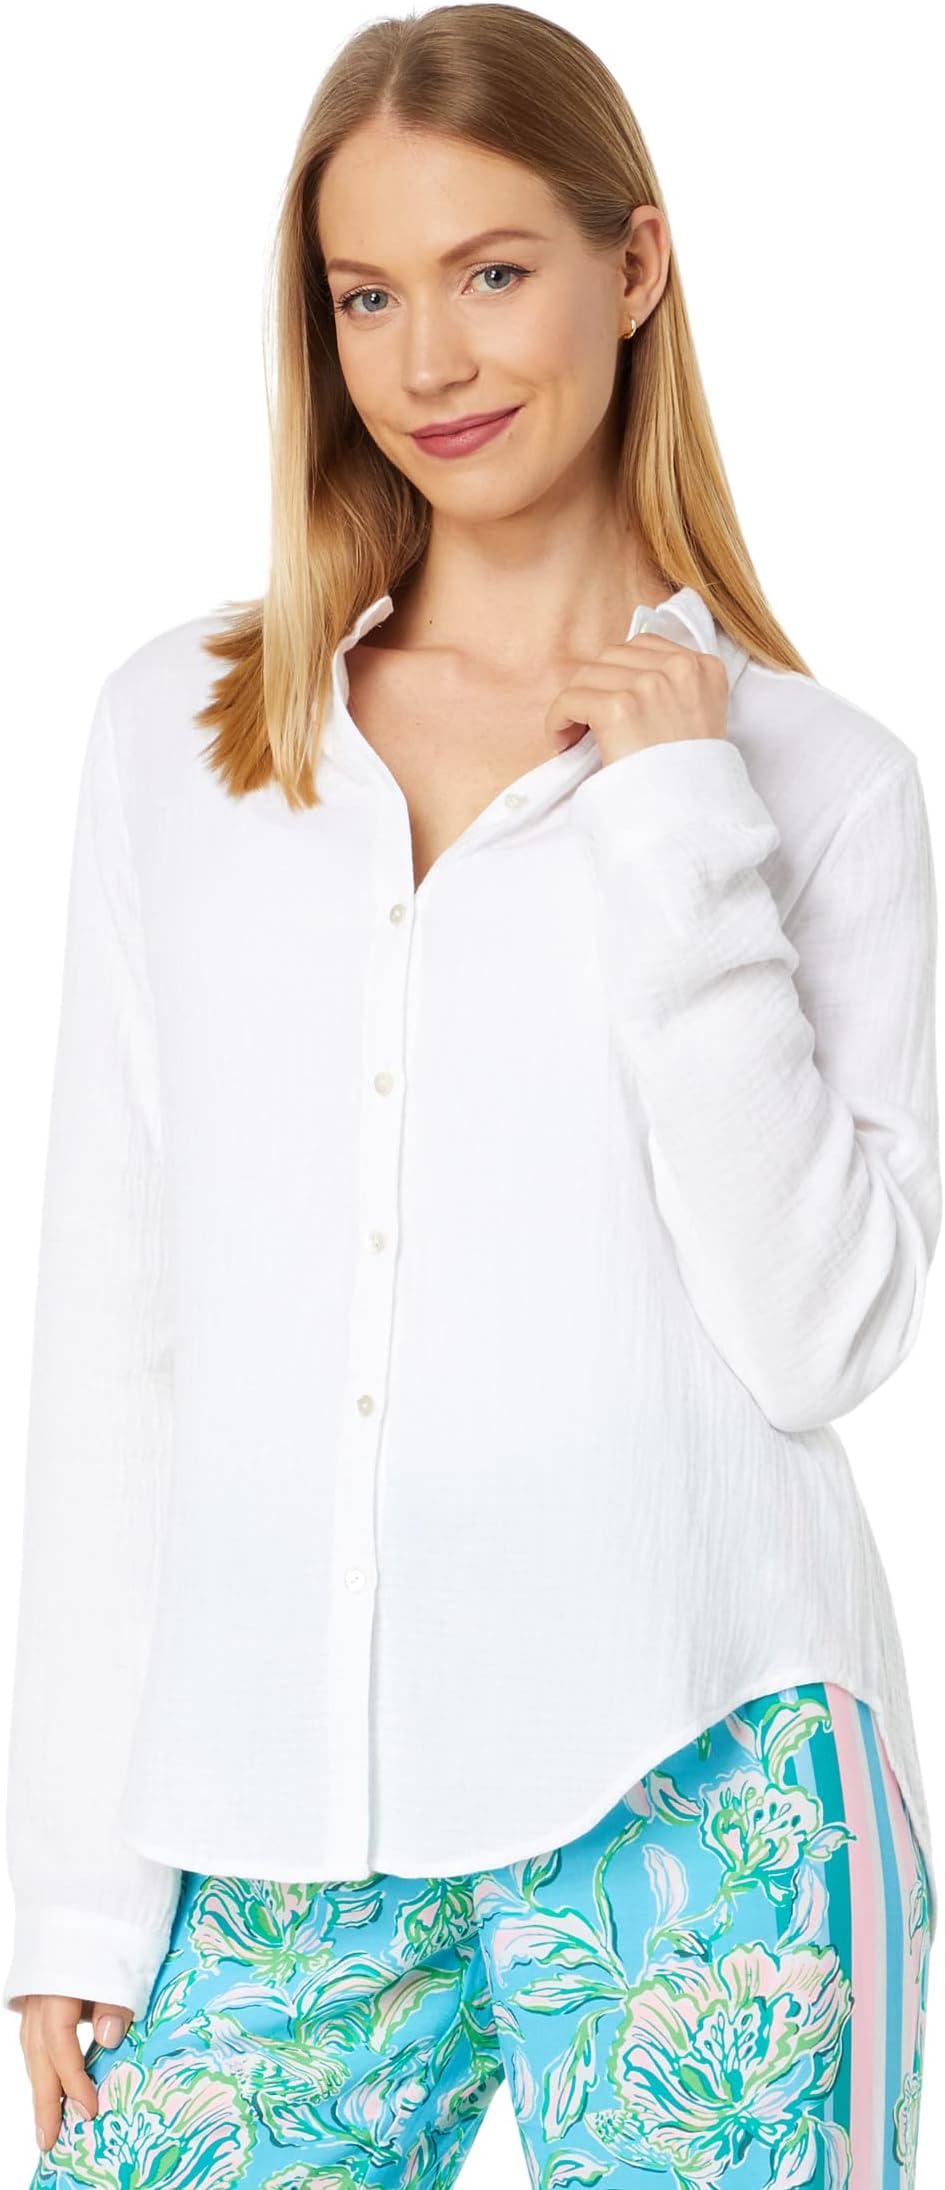 Джинсовая рубашка на пуговицах Lilly Pulitzer, цвет Resort White